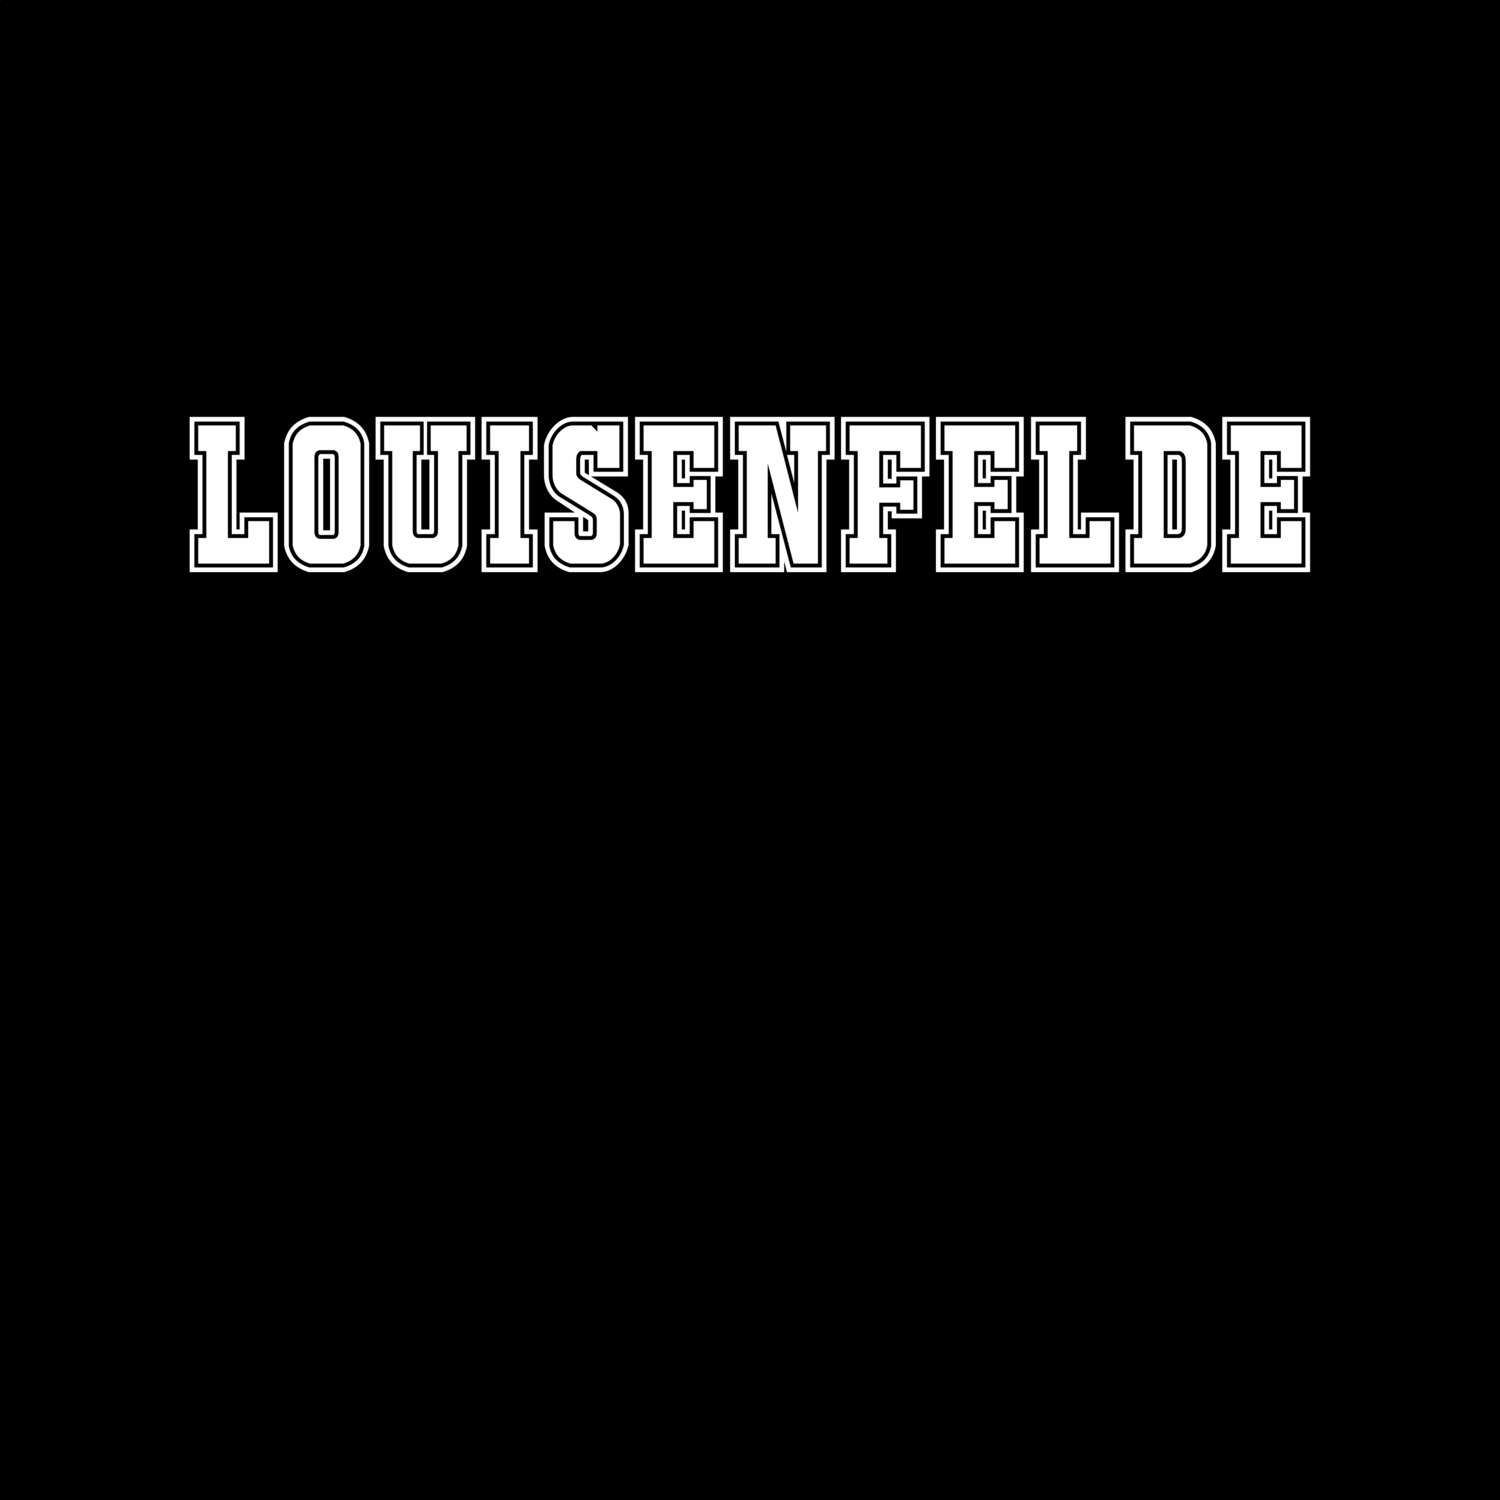 Louisenfelde T-Shirt »Classic«